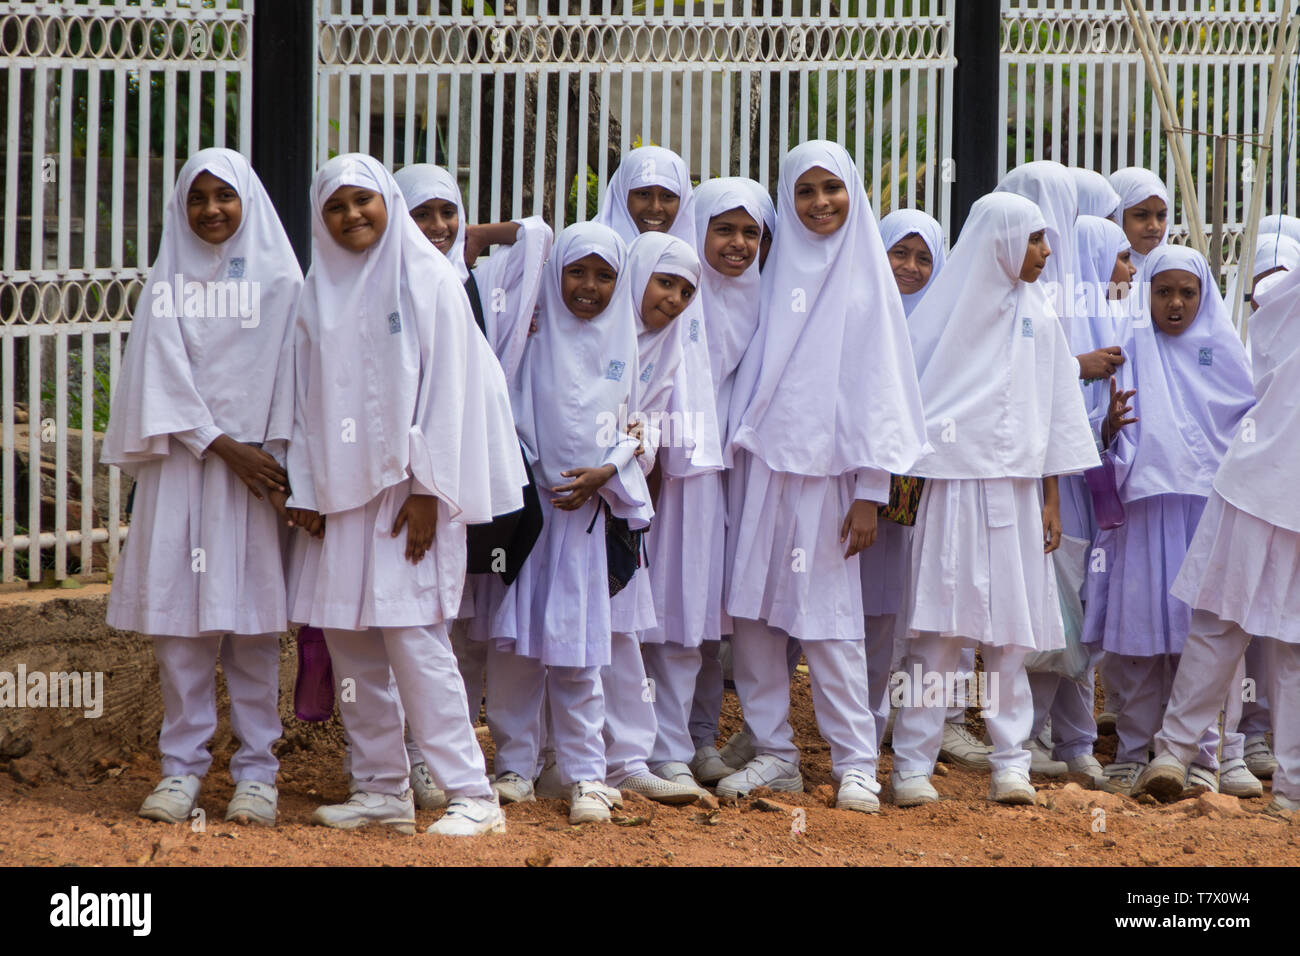 Muslim School Girls Stock Photos & Muslim School Girls Stock ...